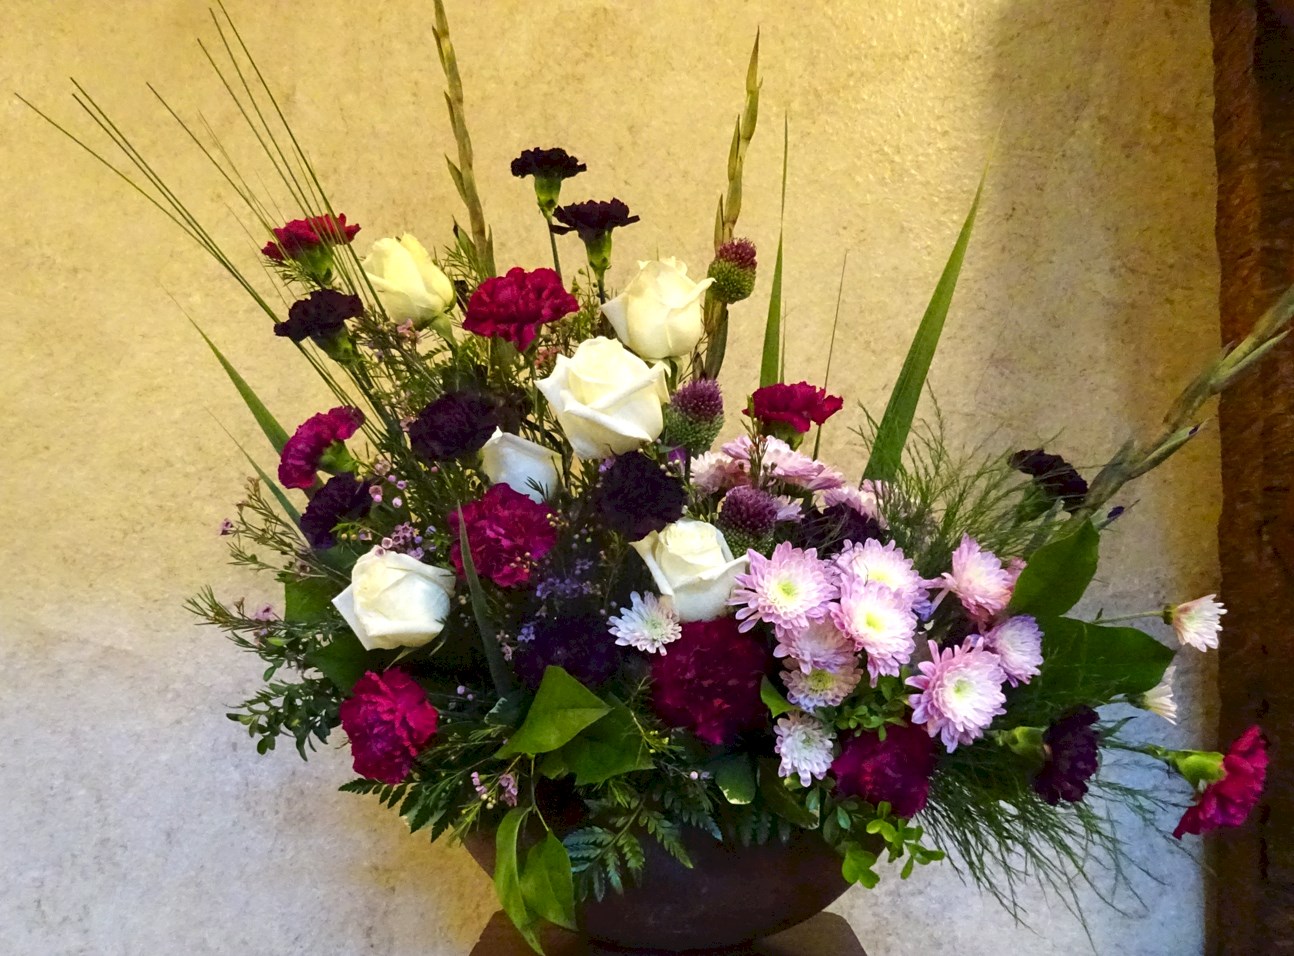 Flowers from Rick, Patt, Sarah, and Marjorie